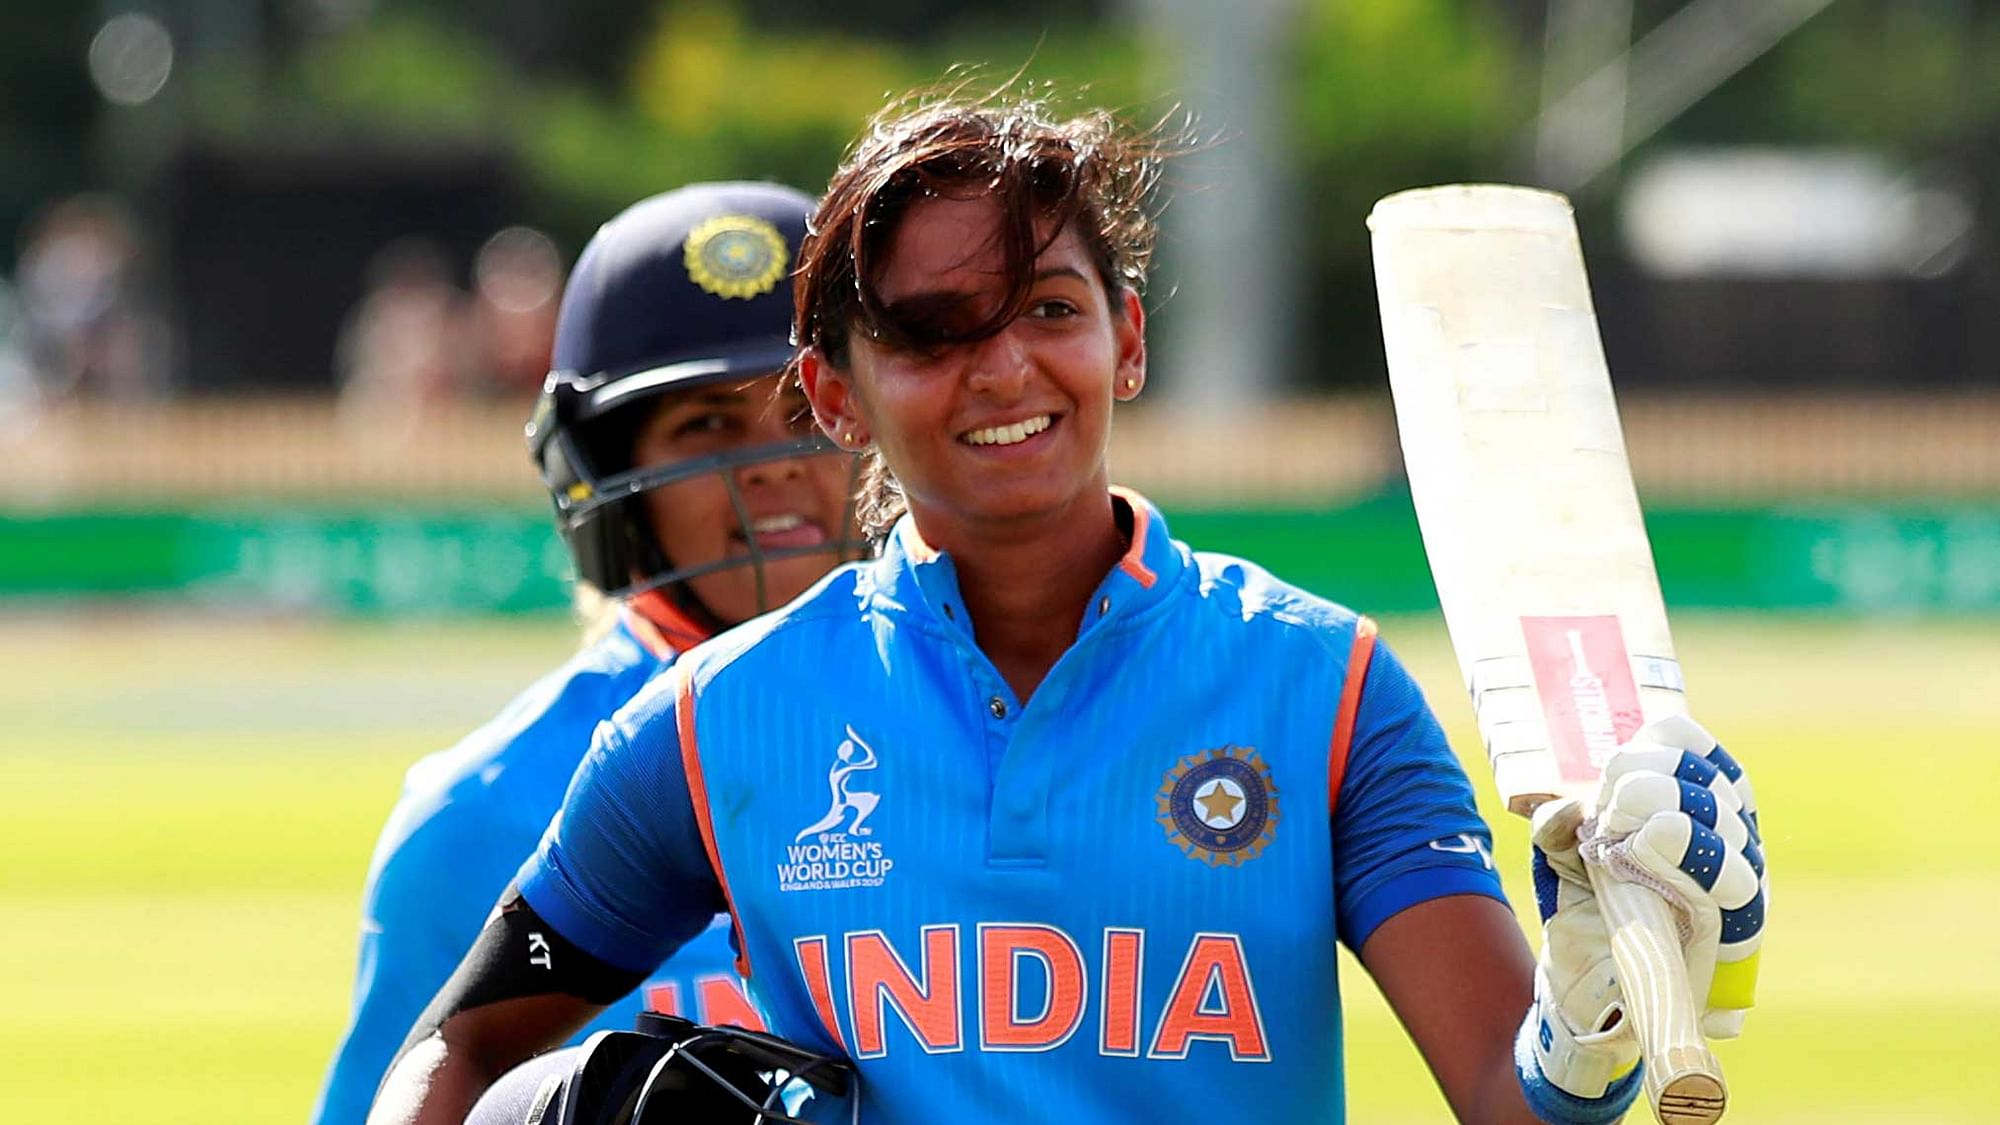 Harmanpreet Kaul will lead the Indian team at this year’s ICC Women’s World Twenty20 2018.